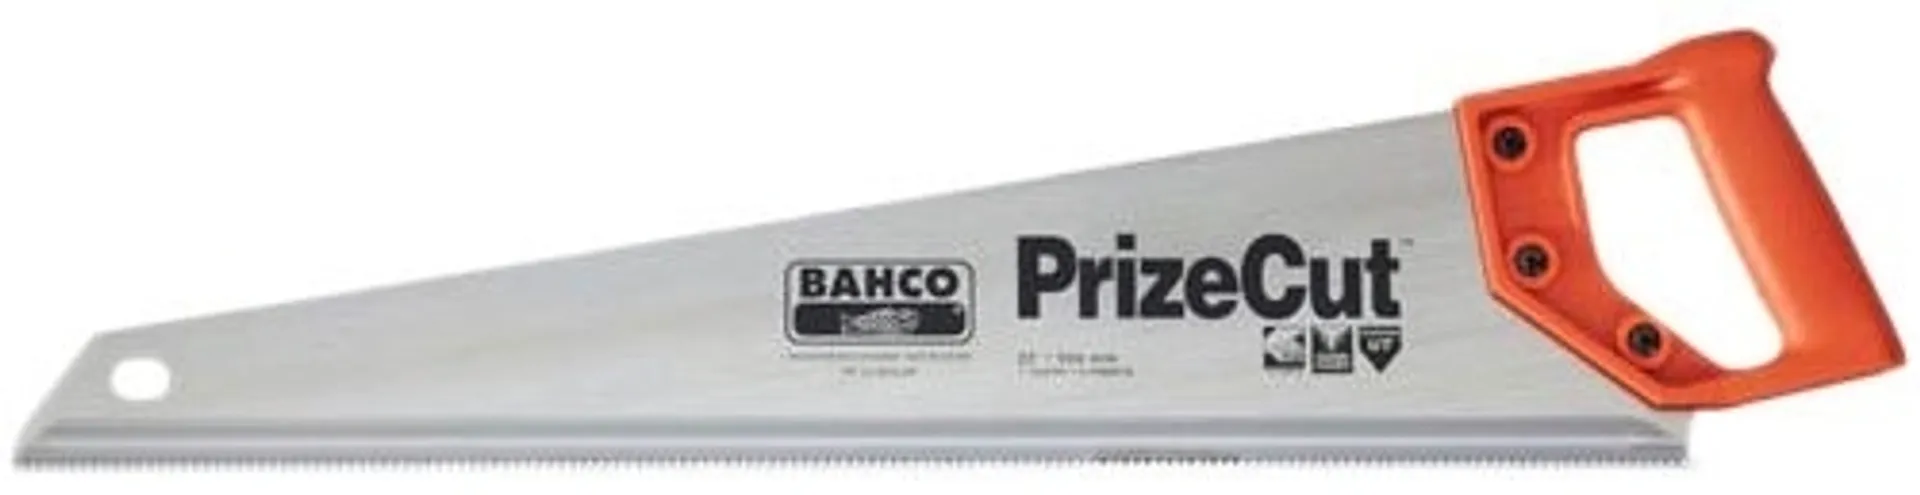 Bahco Prizecut käsisaha 550mm karkea hammastus